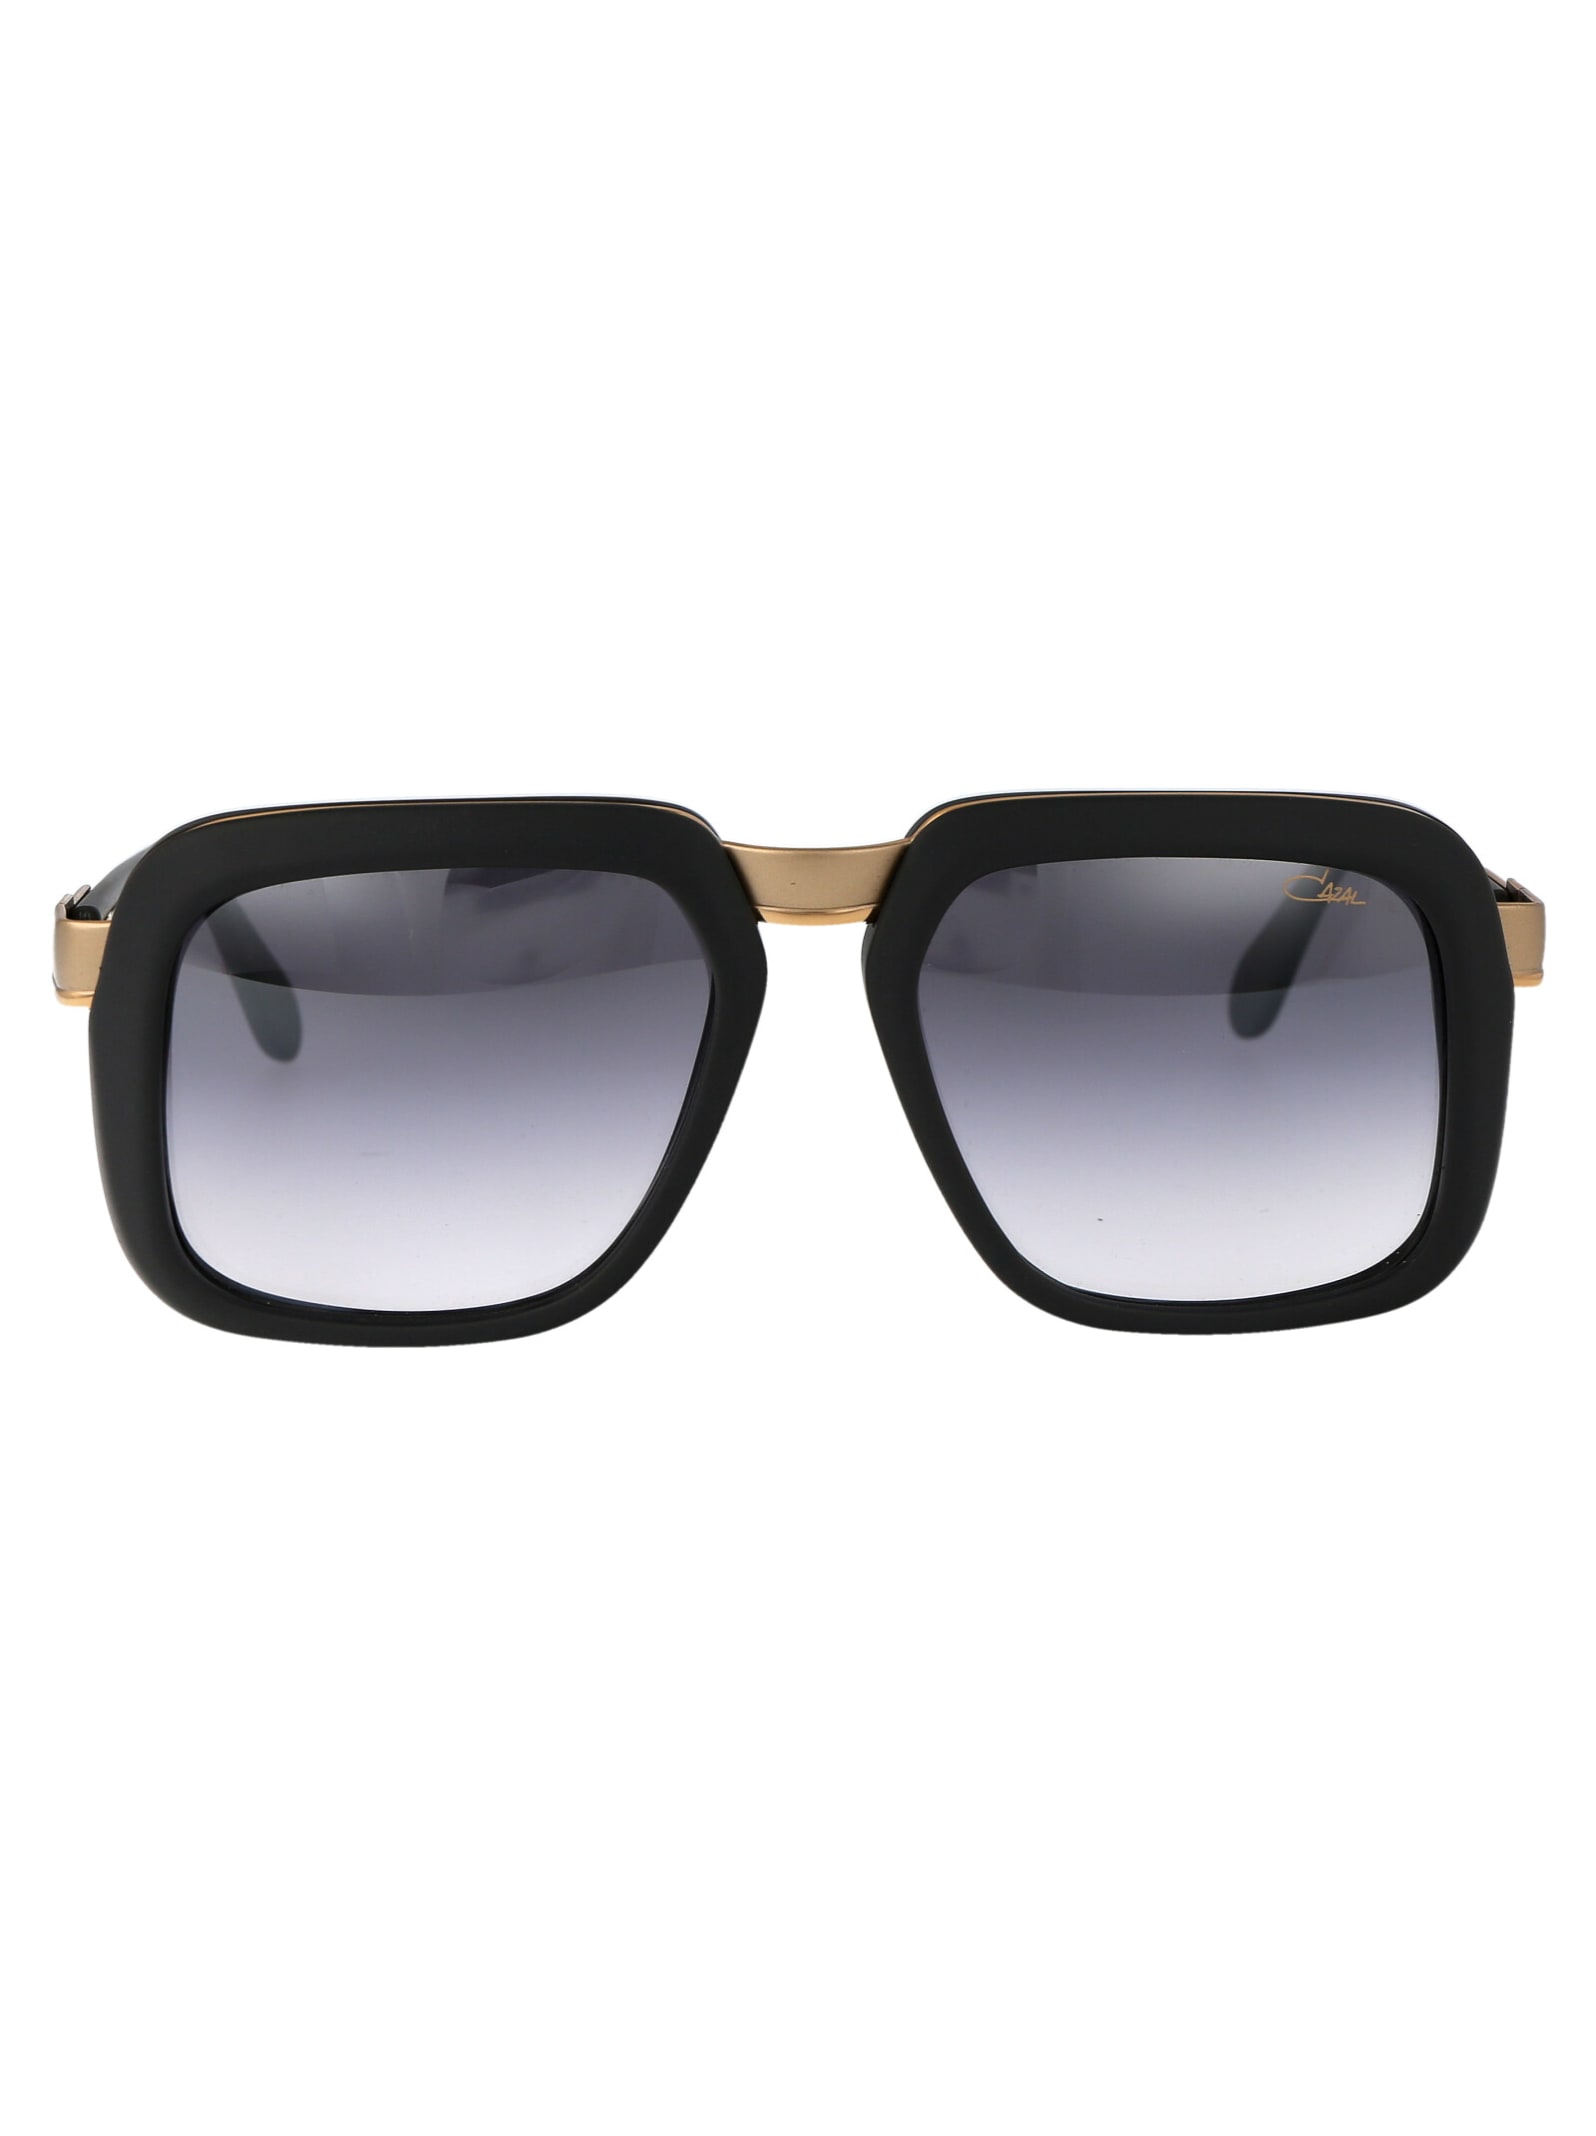 Cazal Mod. 616/3 Sunglasses In 050 Green